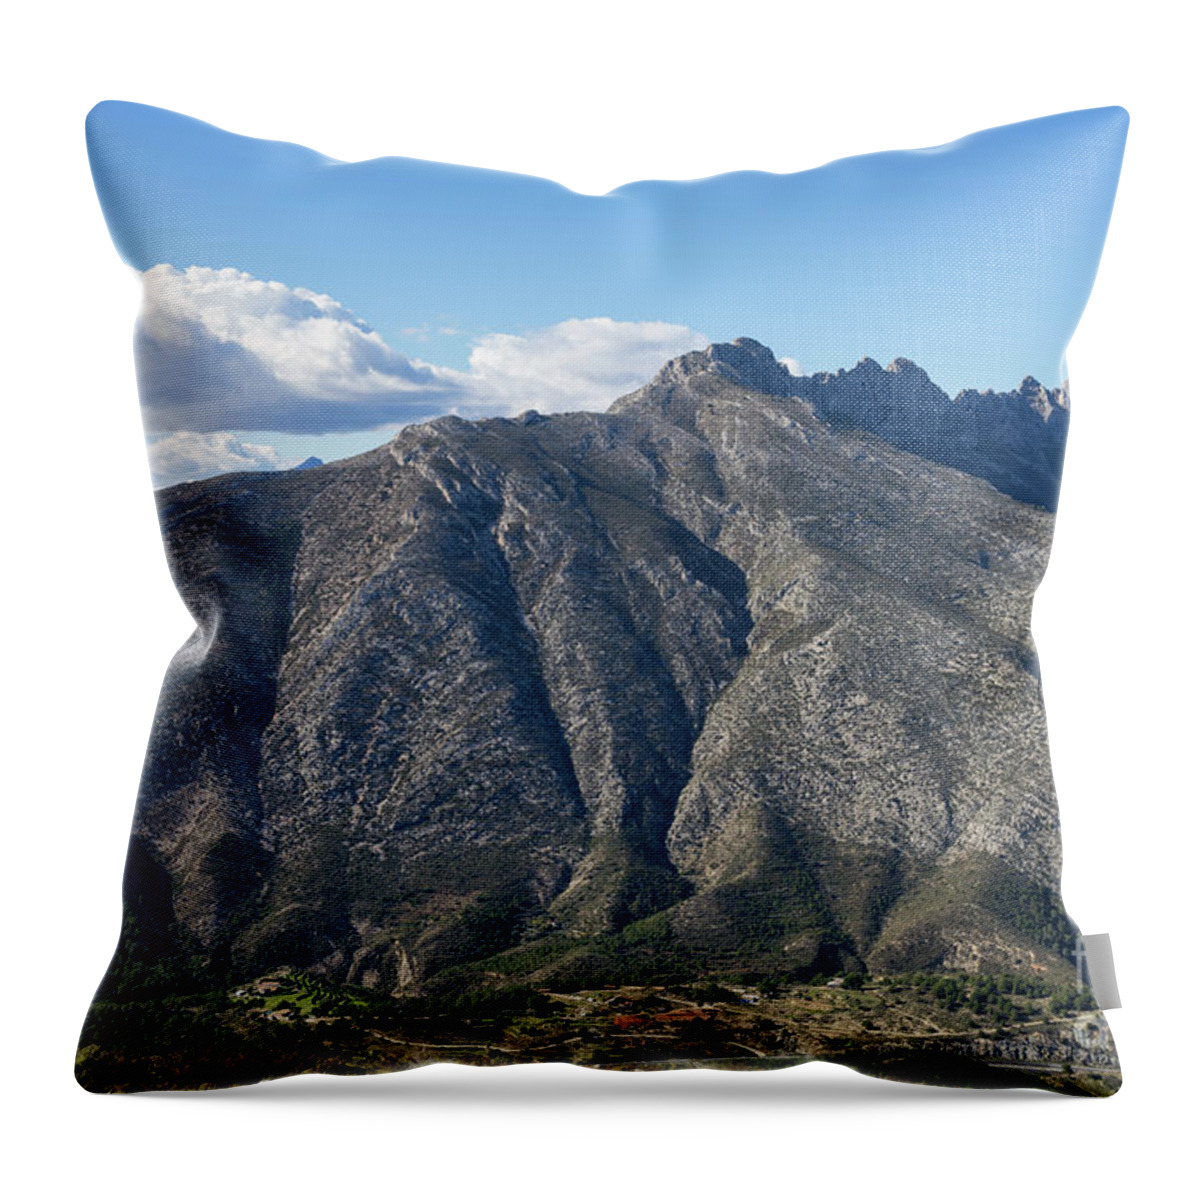 Mountain Landscape Throw Pillow featuring the photograph Sierra de Bernia mountain ridge and clouds by Adriana Mueller